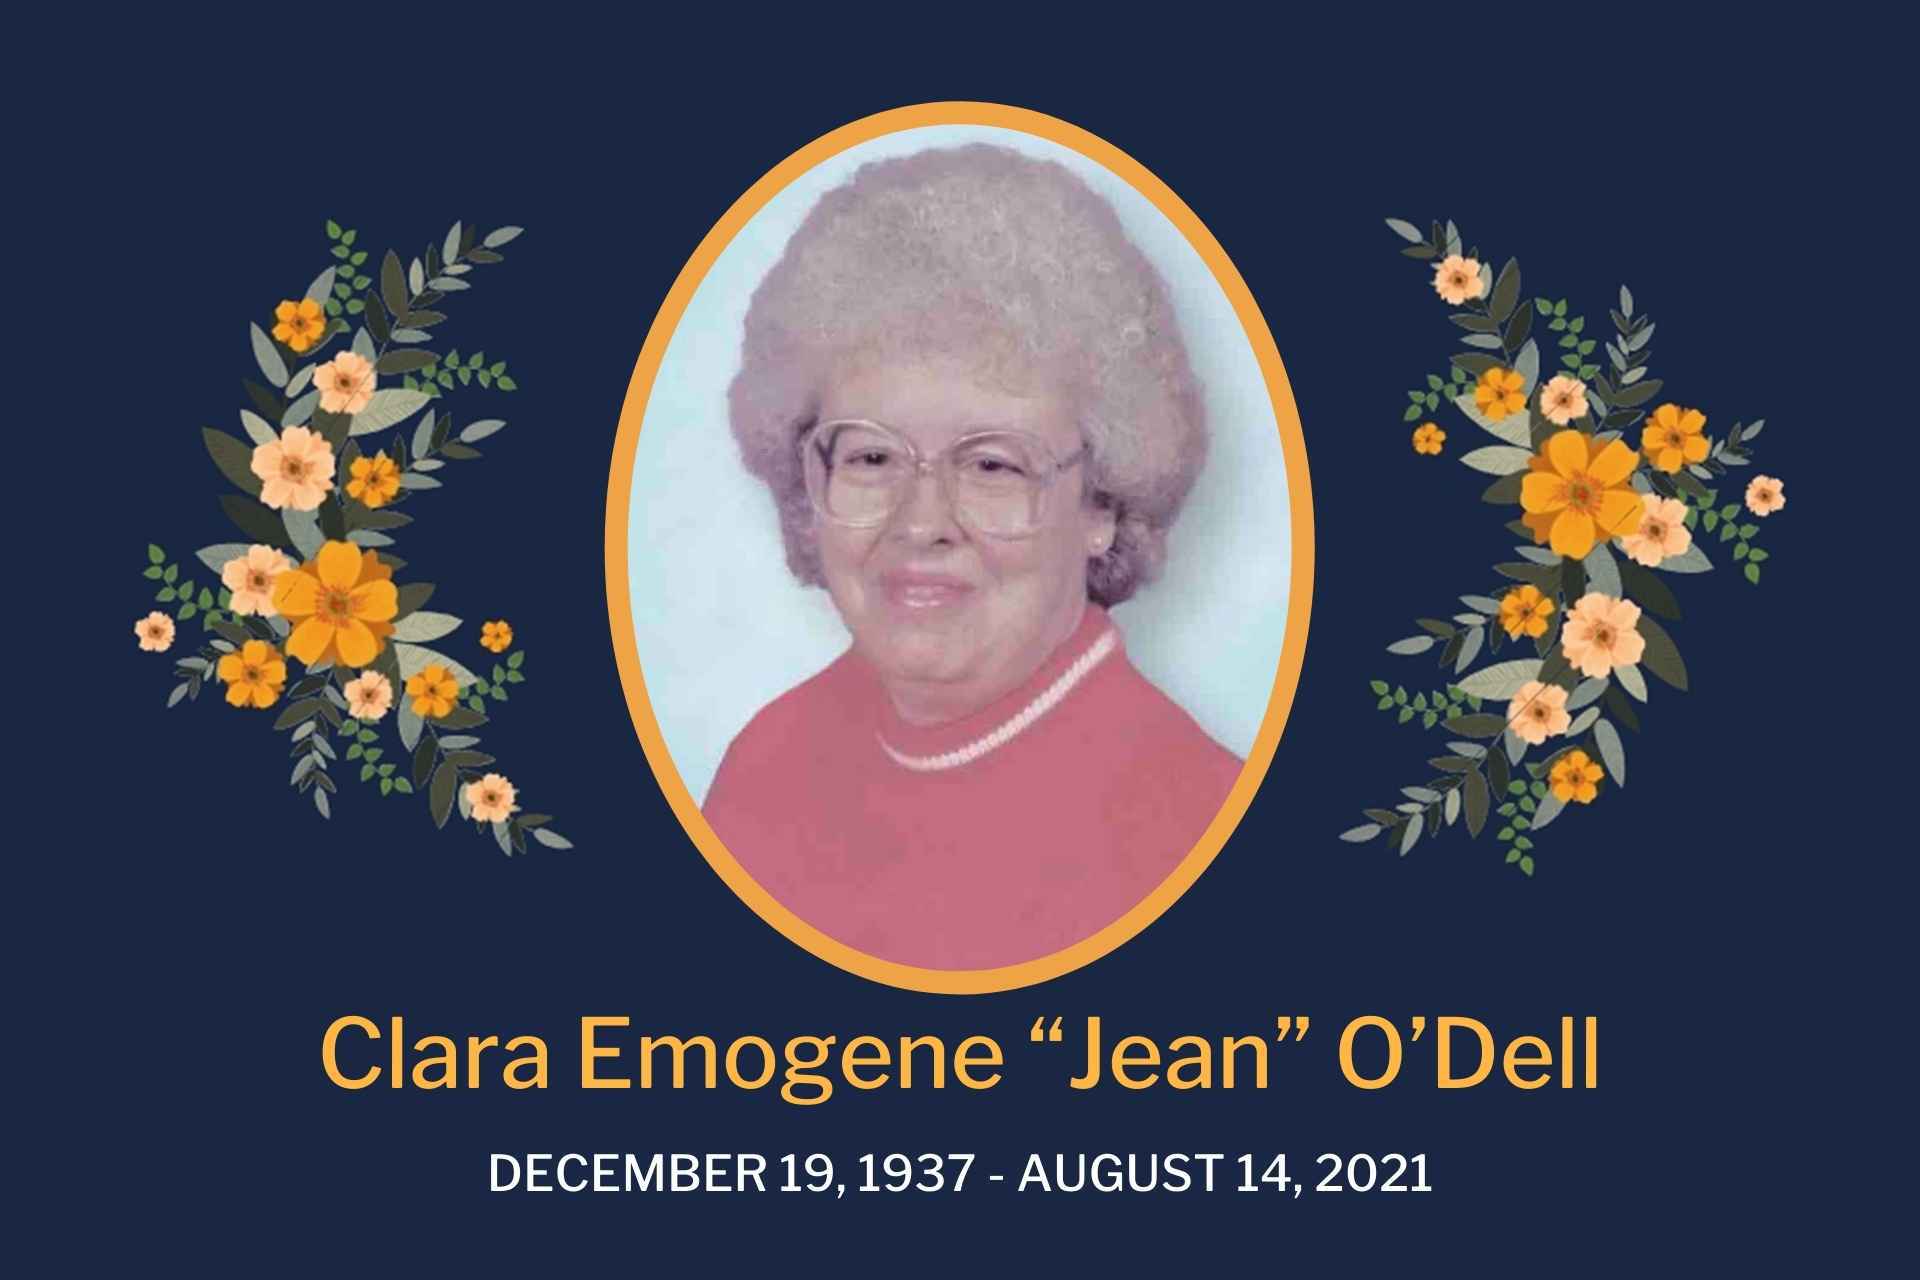 Obituary Jean ODell